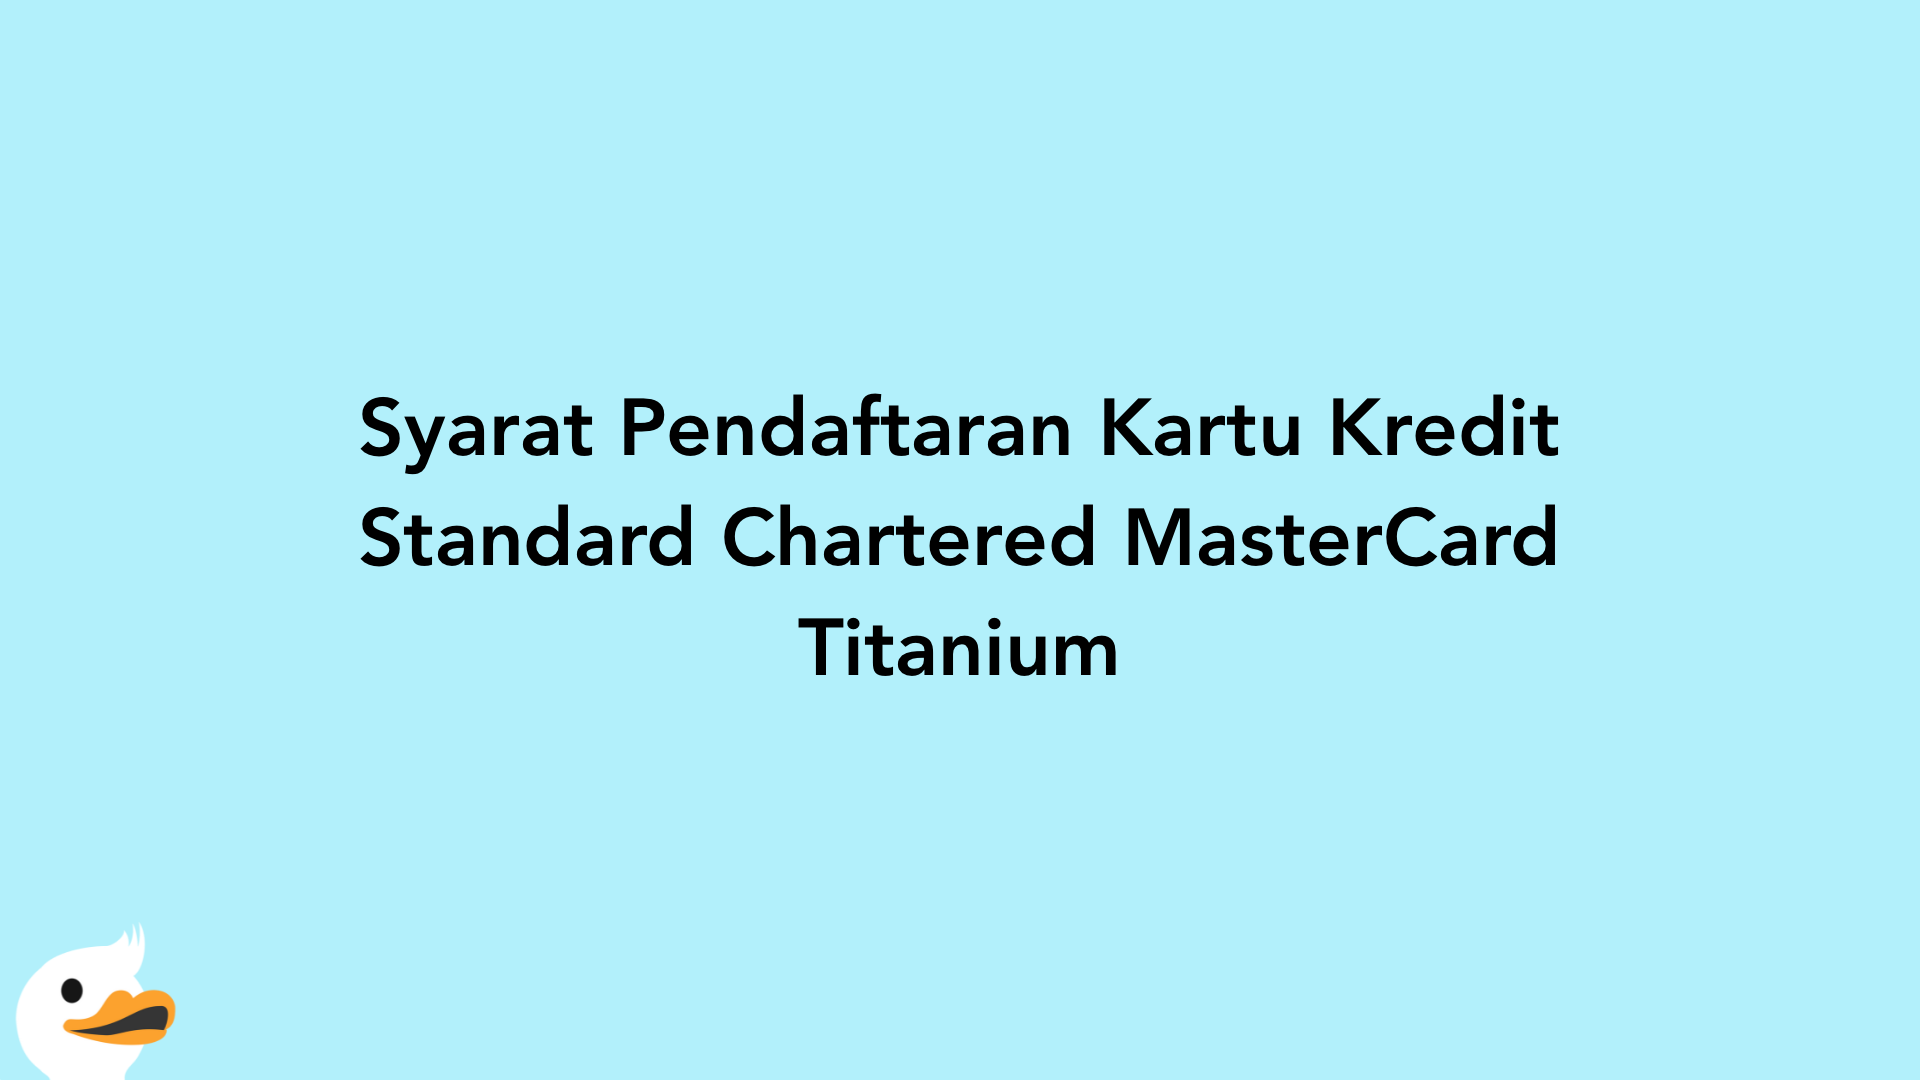 Syarat Pendaftaran Kartu Kredit Standard Chartered MasterCard Titanium